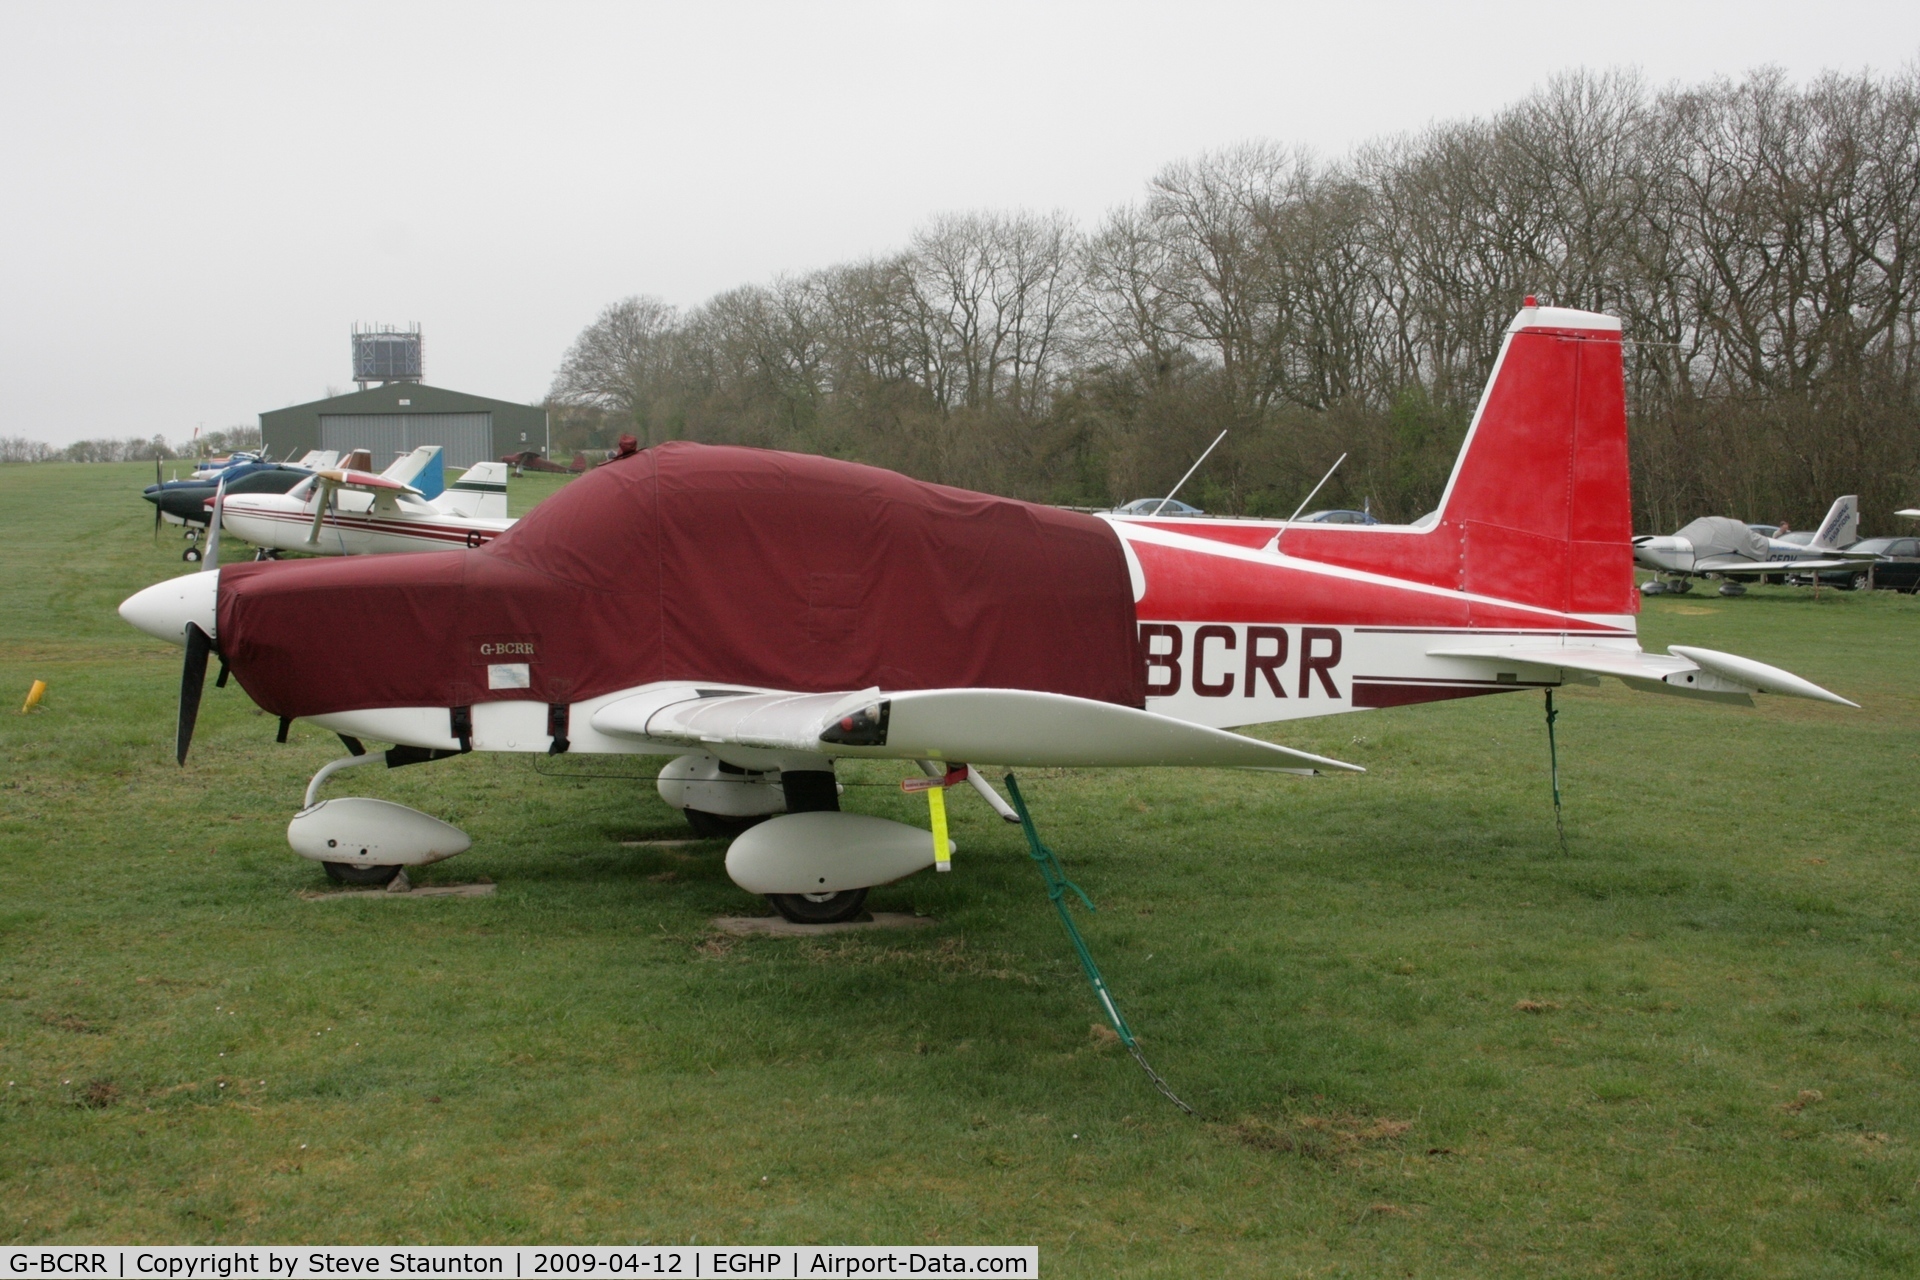 G-BCRR, 1974 Grumman American AA-5B Tiger C/N AA5B-0006, Taken at Popham Airfield, England on a gloomy April Sunday (12/04/09)